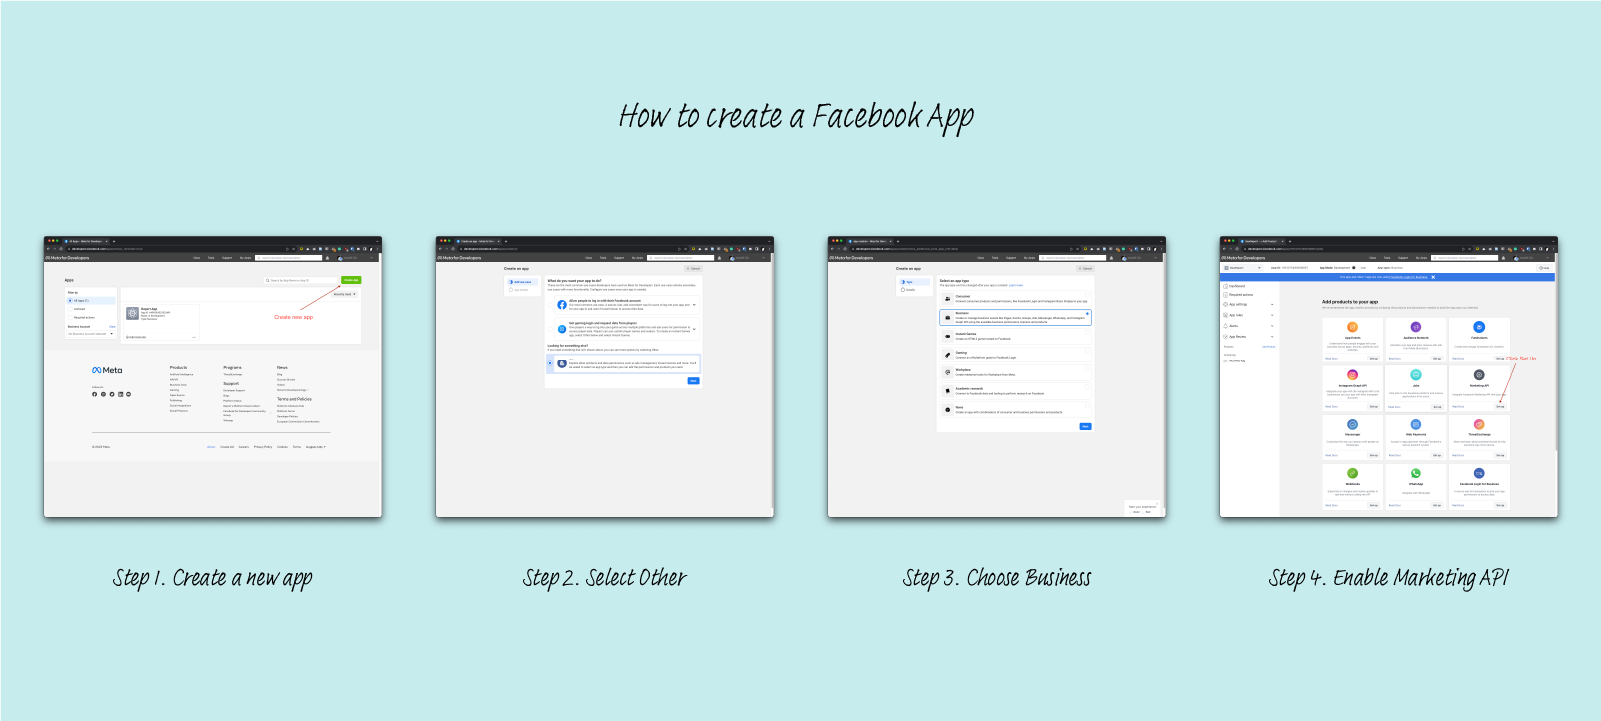 How to create a Facebook App